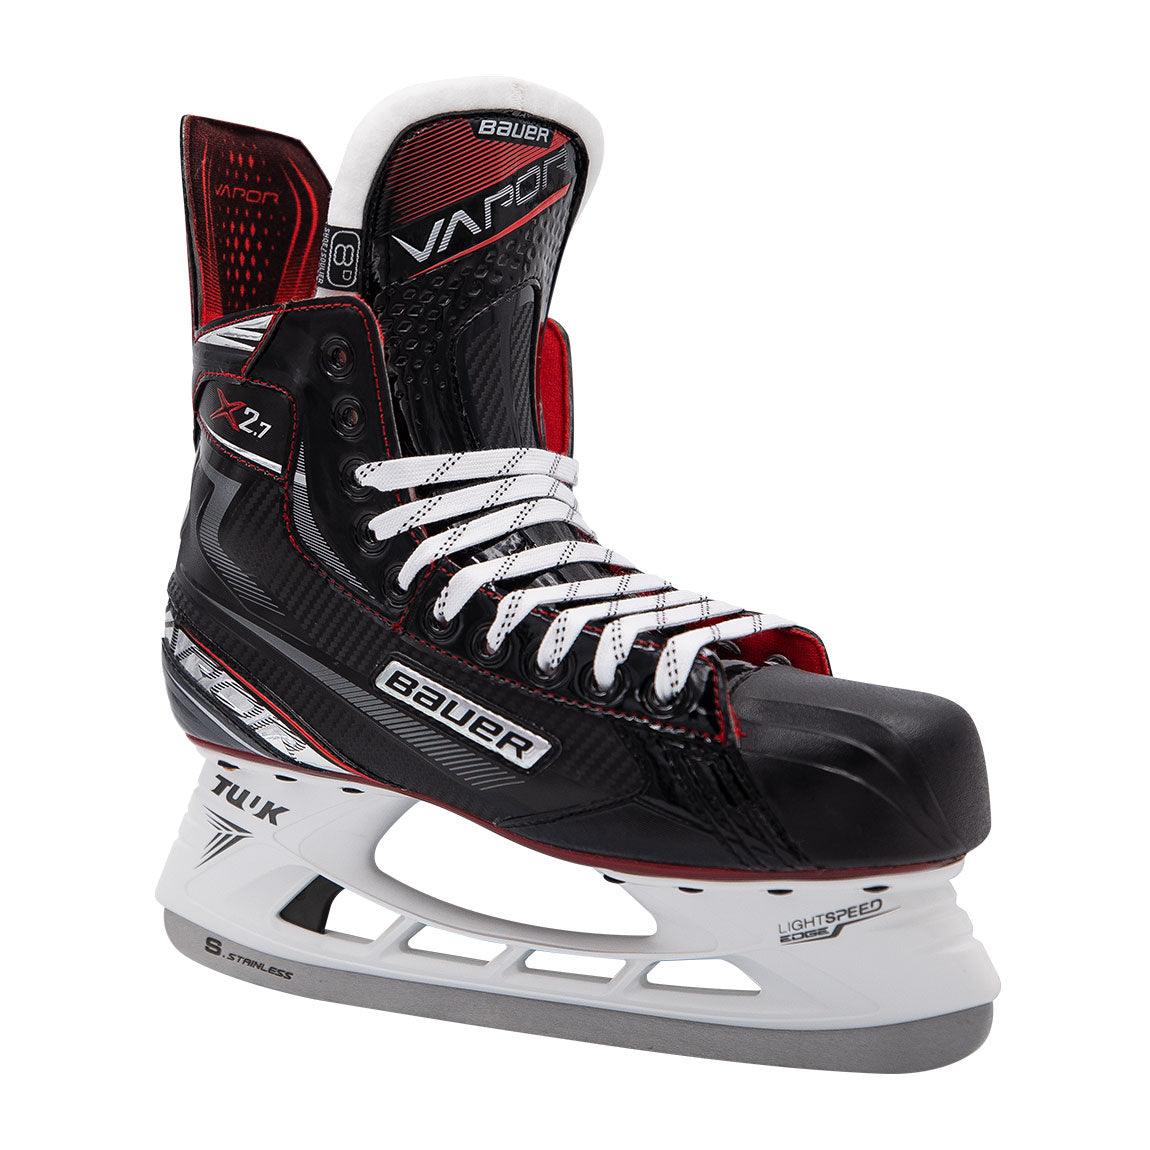 Vapor X2.7 Hockey Skates - Junior - Sports Excellence